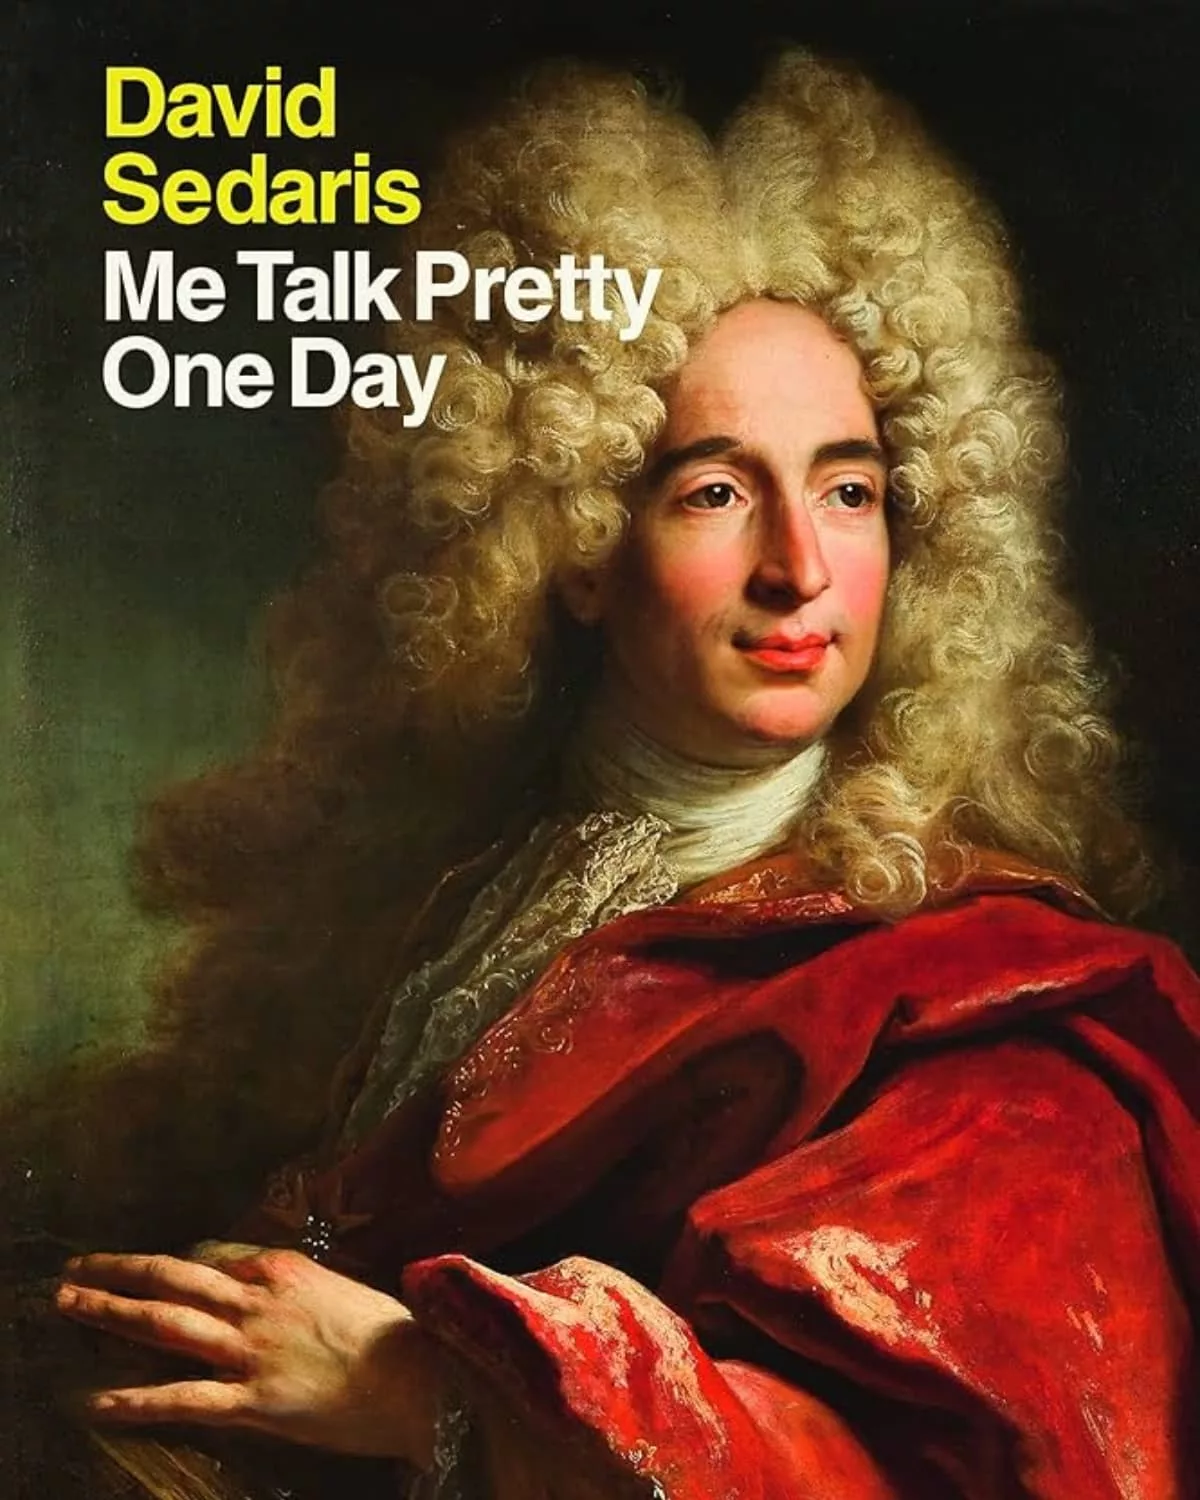 Me Talk pretty one day David Sedaris book cover man in Victorian dress